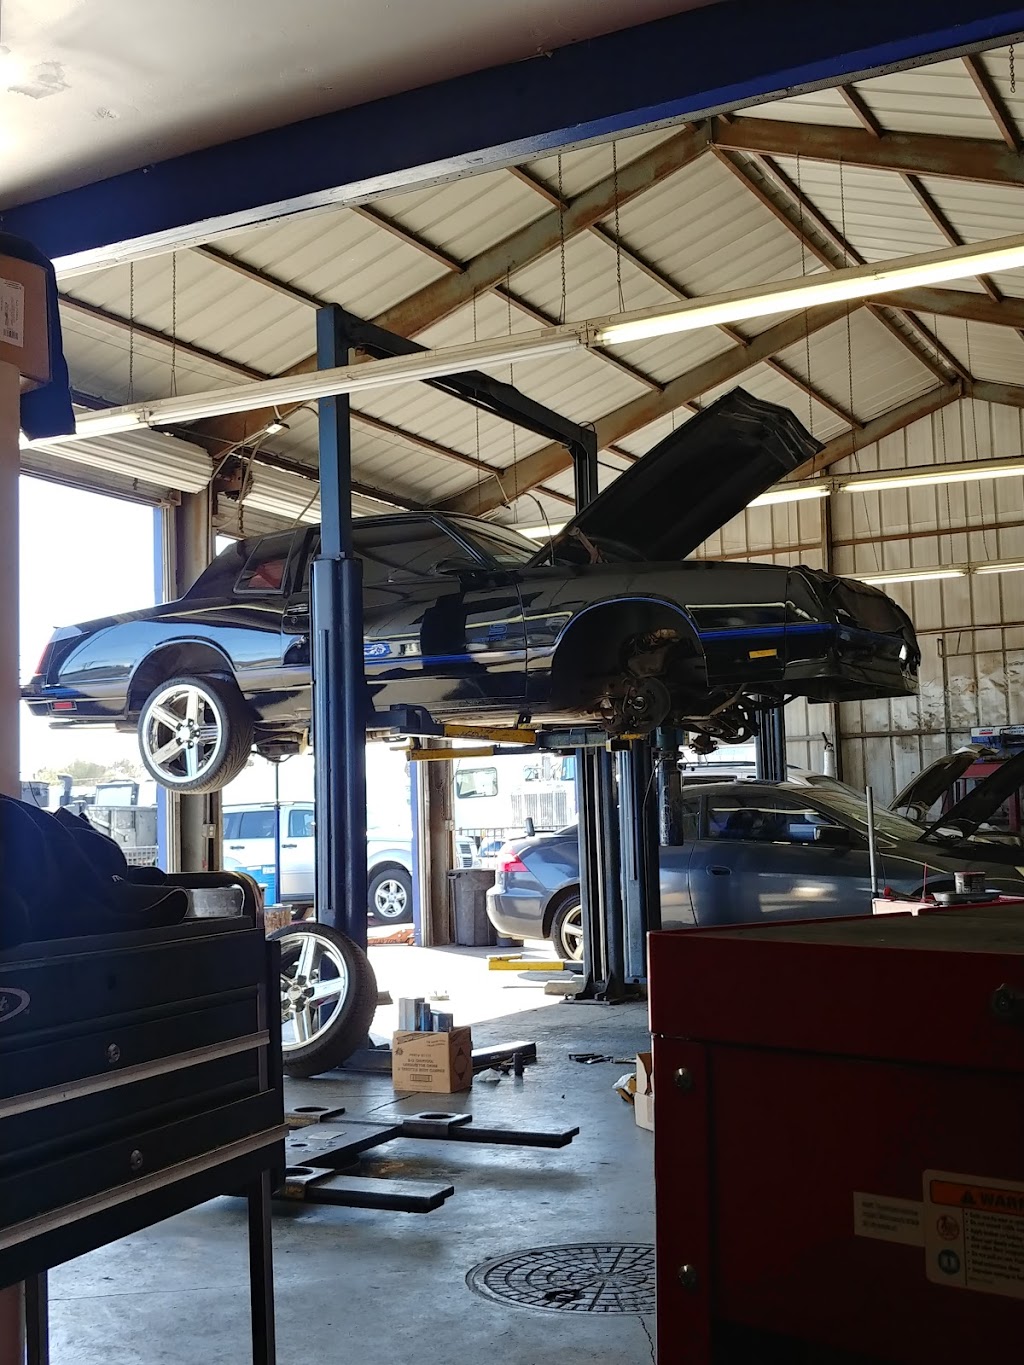 Inner-City Auto Repair & Tires | 900 E 6th St, Beaumont, CA 92223, USA | Phone: (951) 845-0091